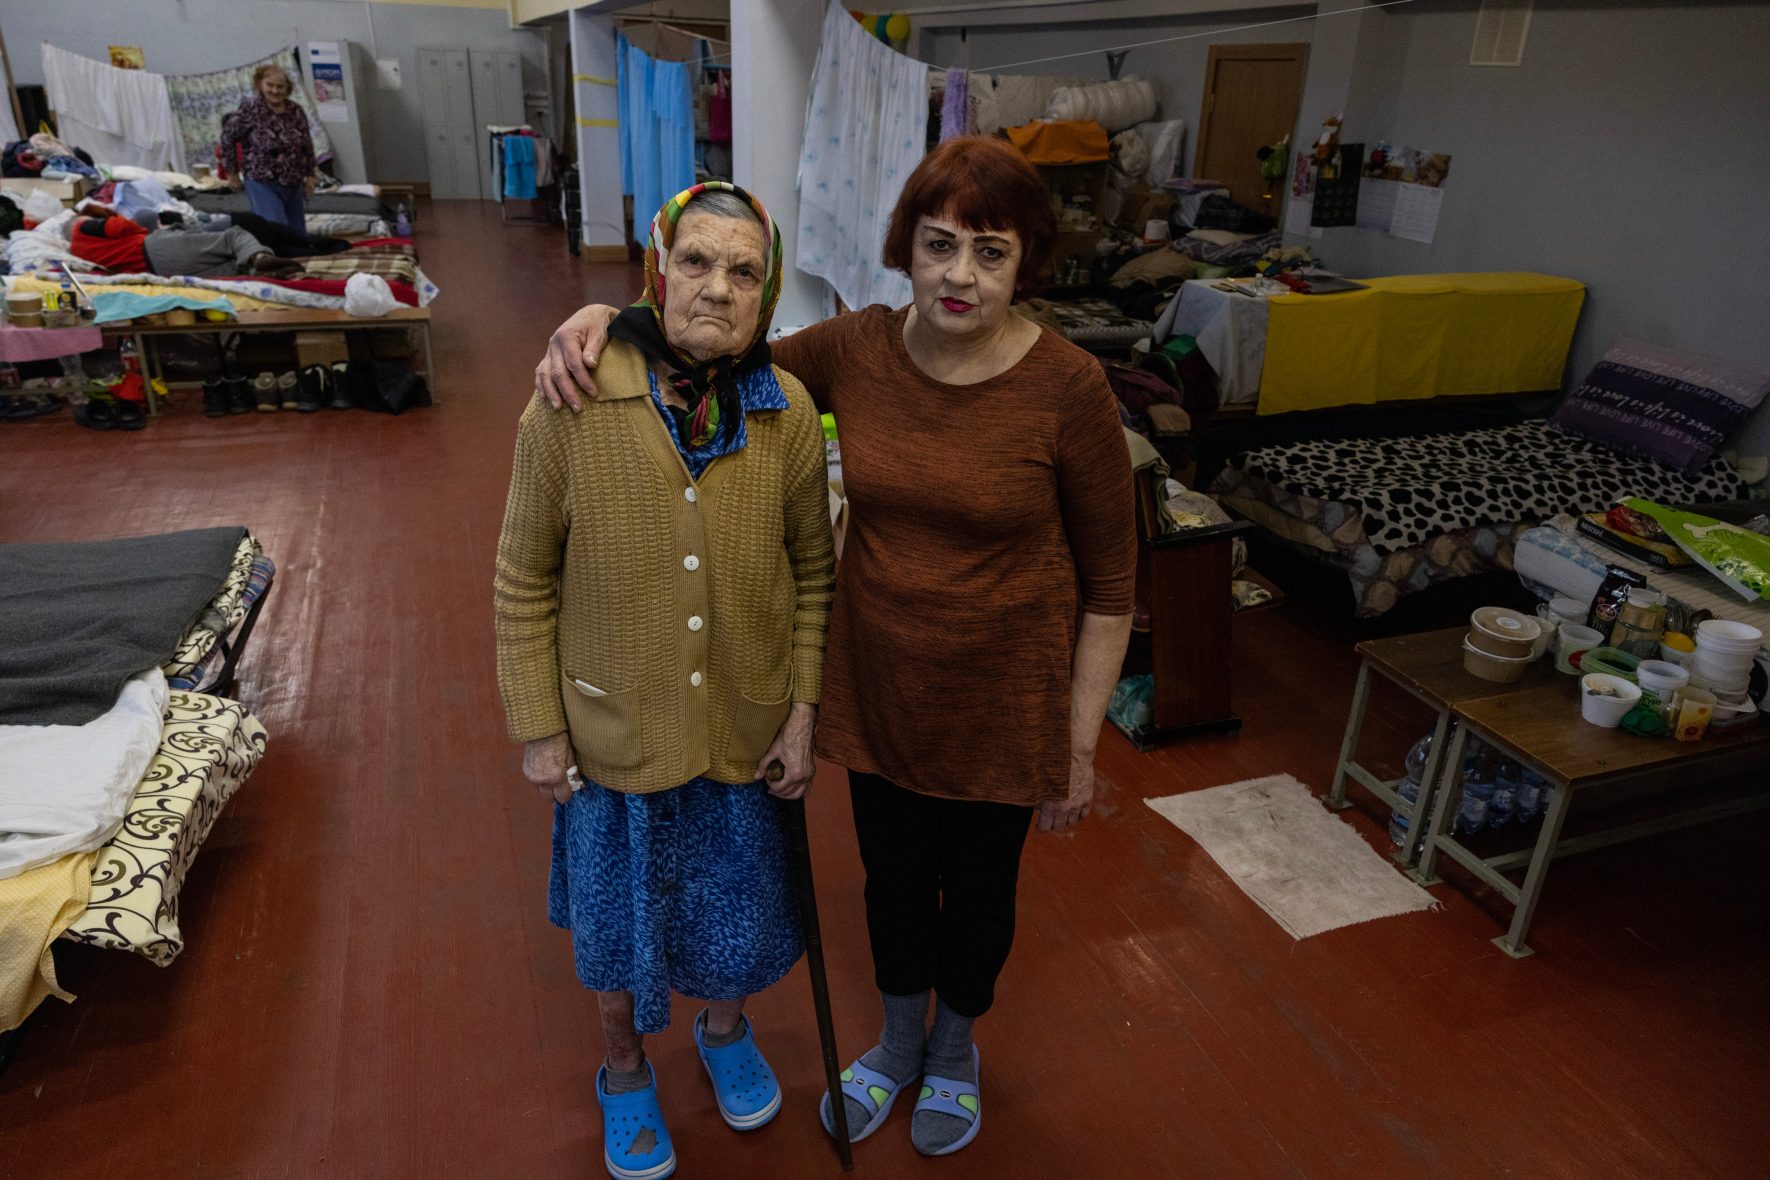 Internally displaced Ukrainians pose at a shelter in Lviv, Ukraine.